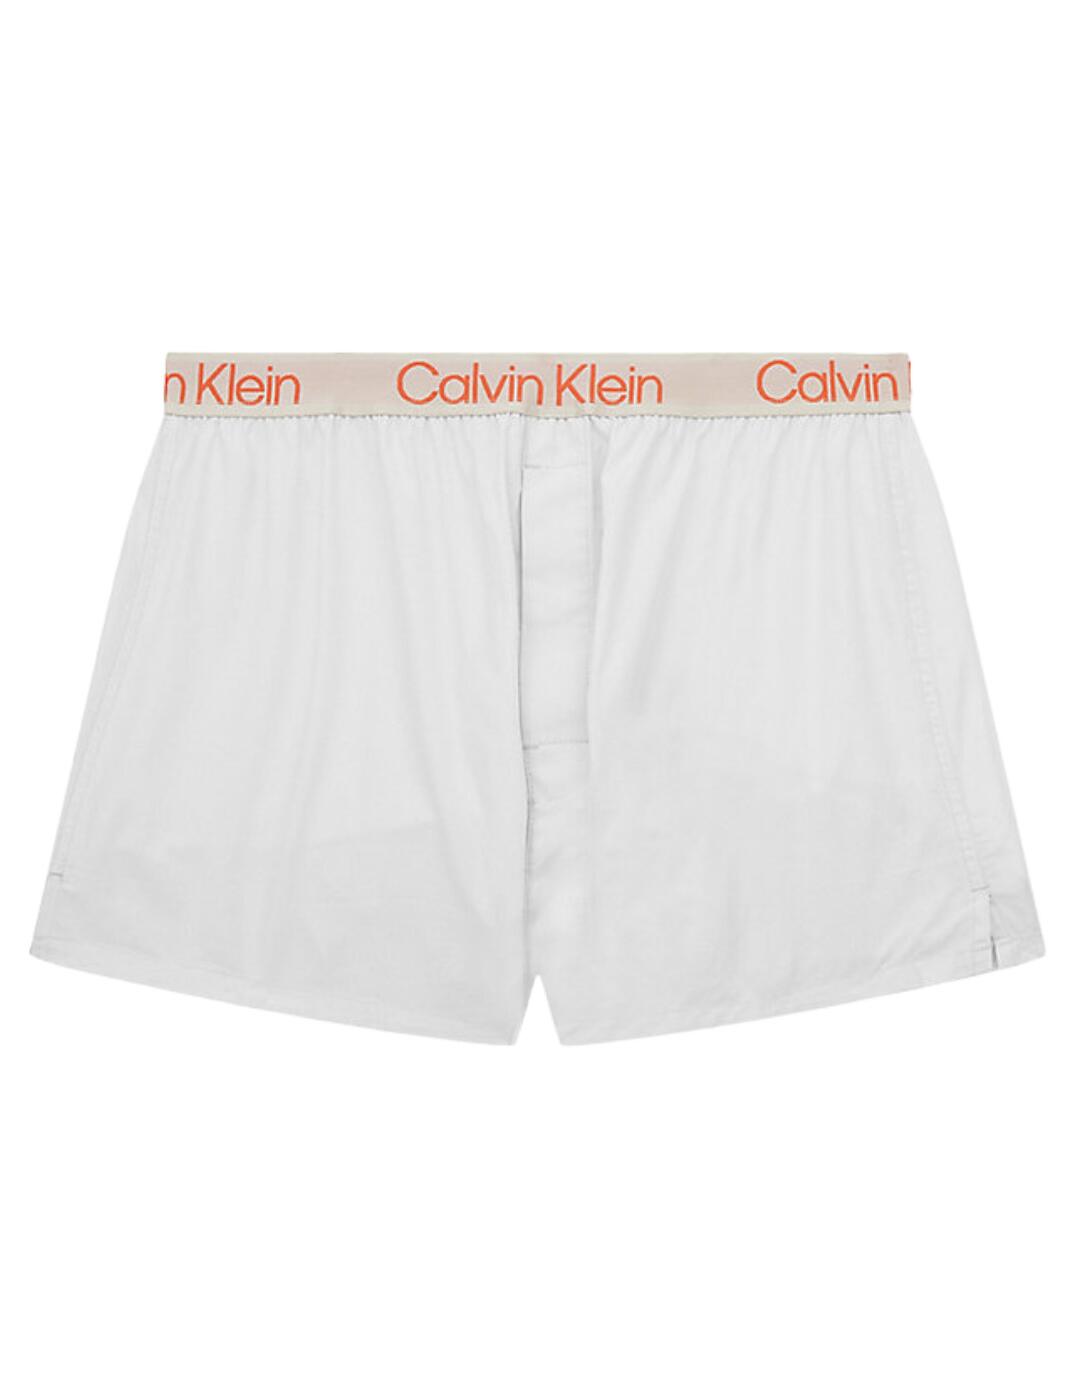  Calvin Klein Mens Modern Structure Boxer Slim Ocean Storm